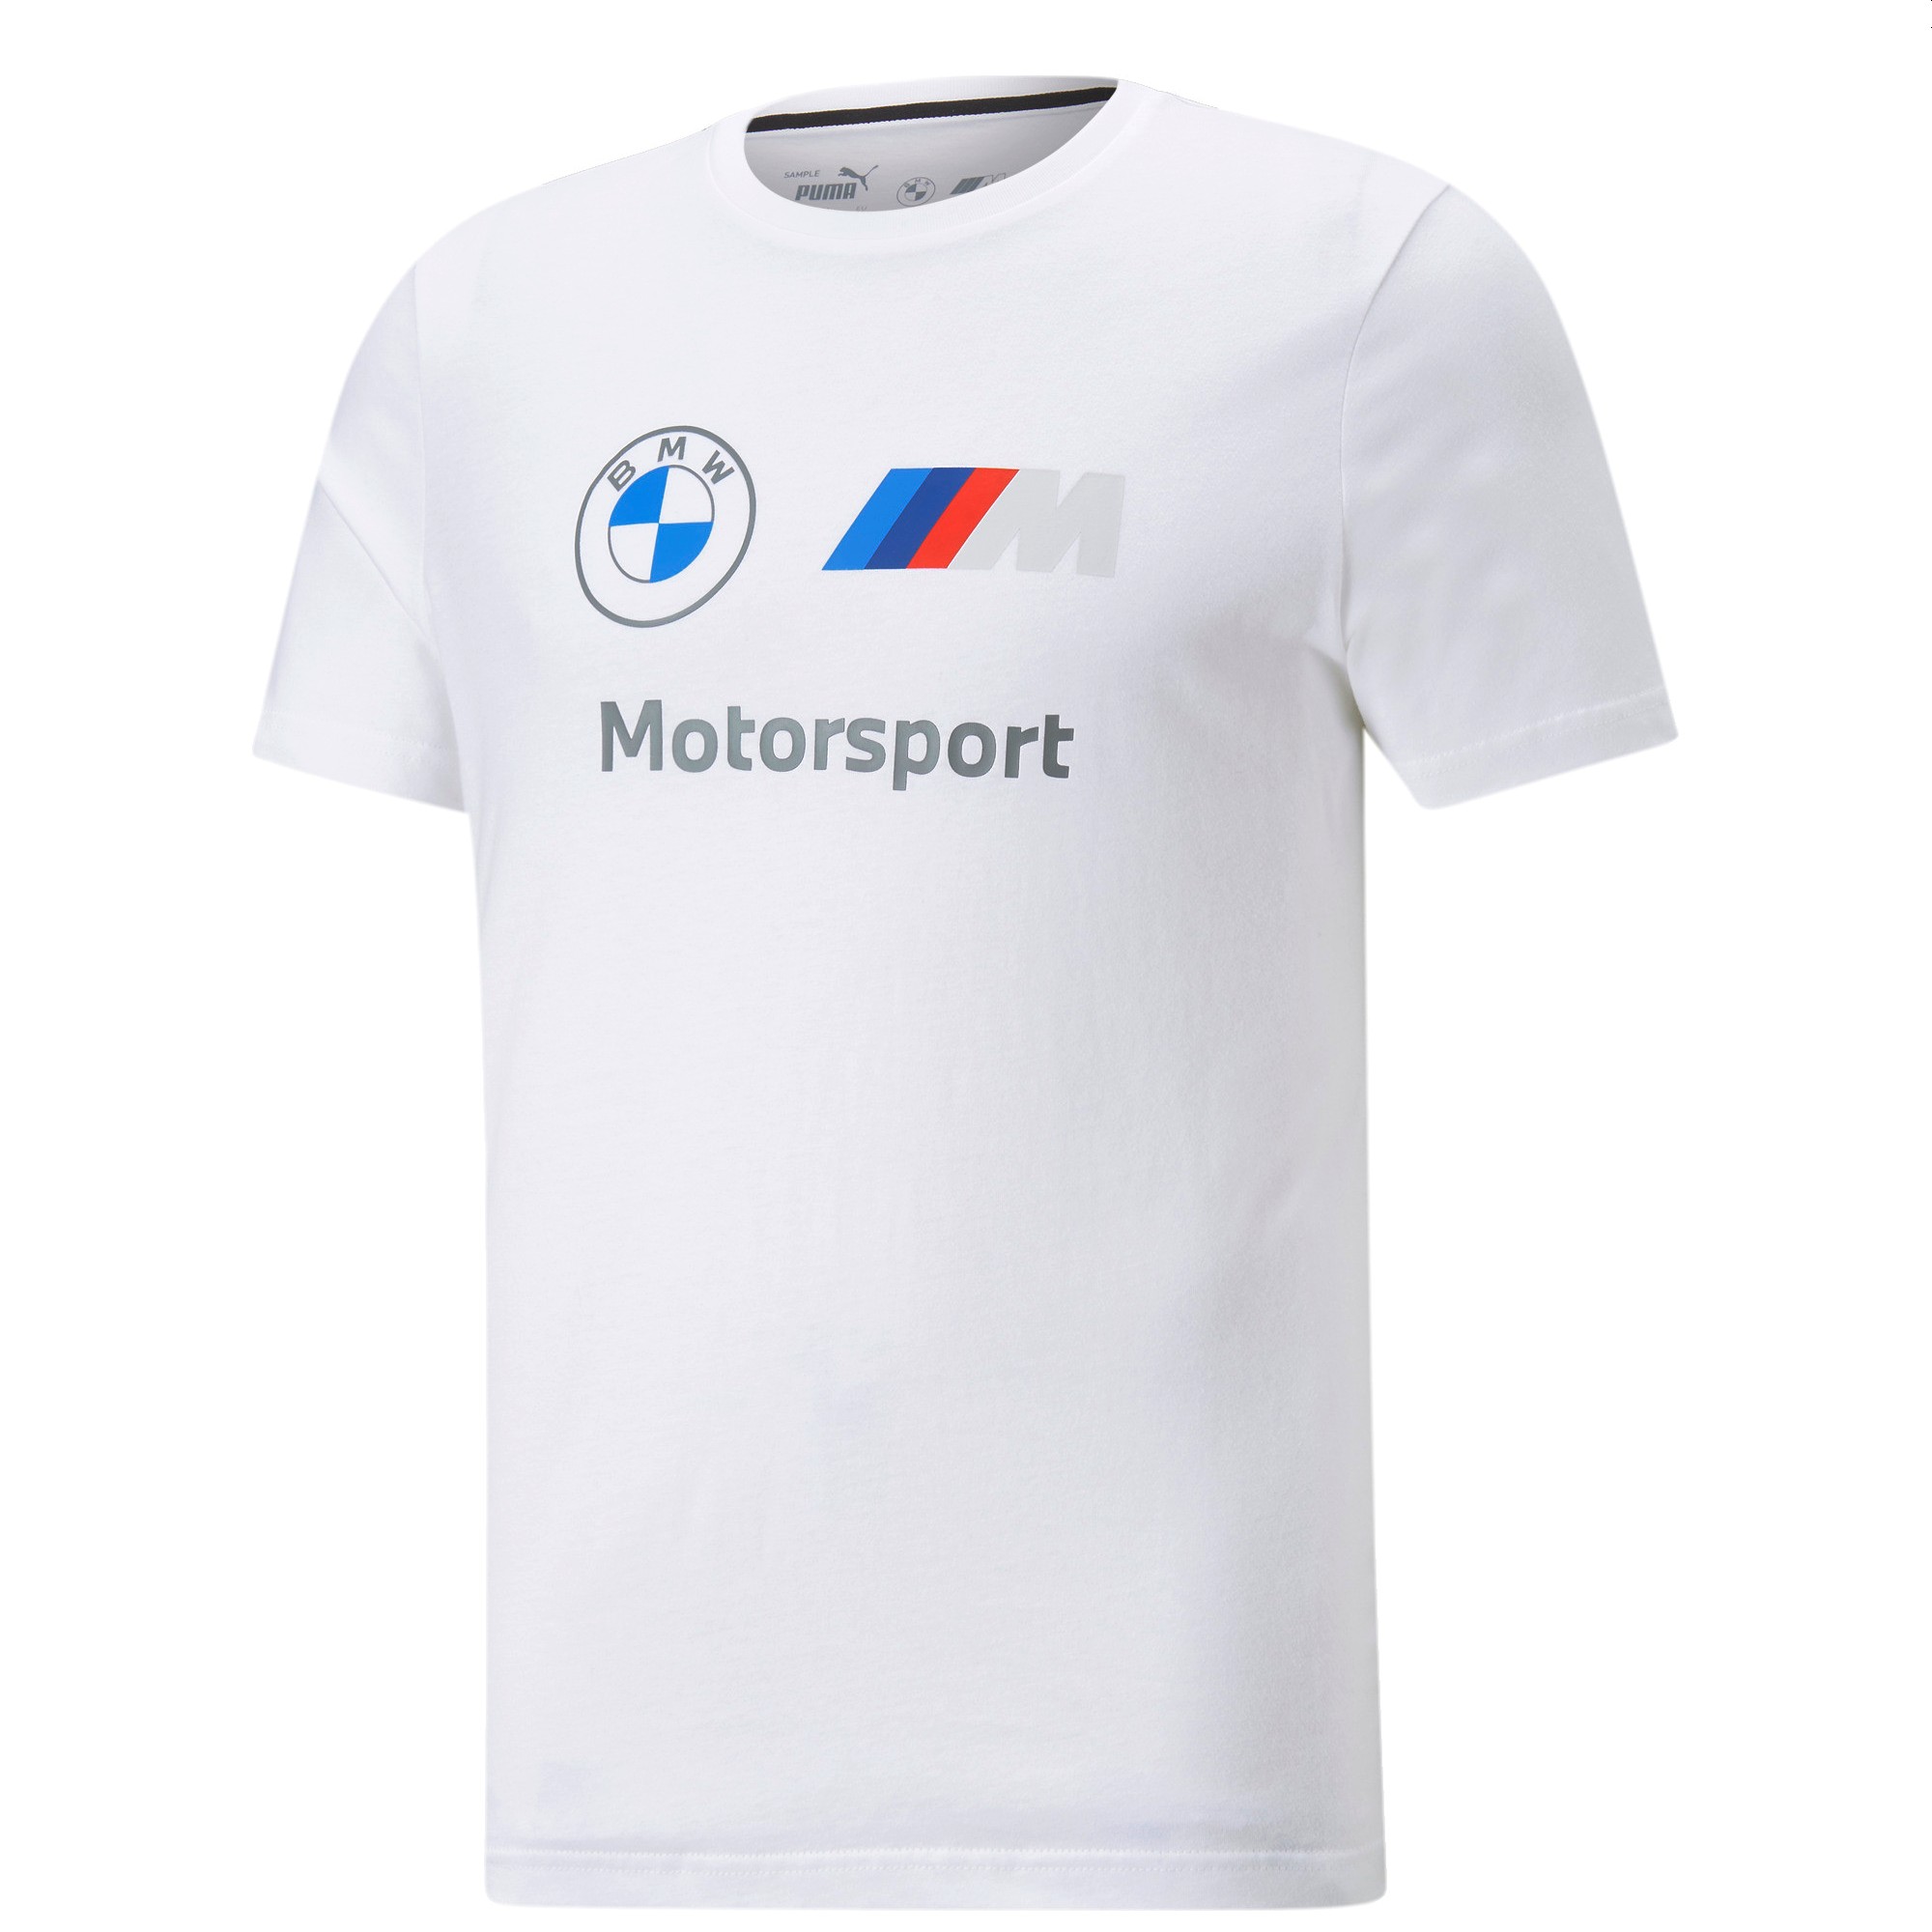 BMW Motorsport - Fshop1 - Magazin F1™ București RO